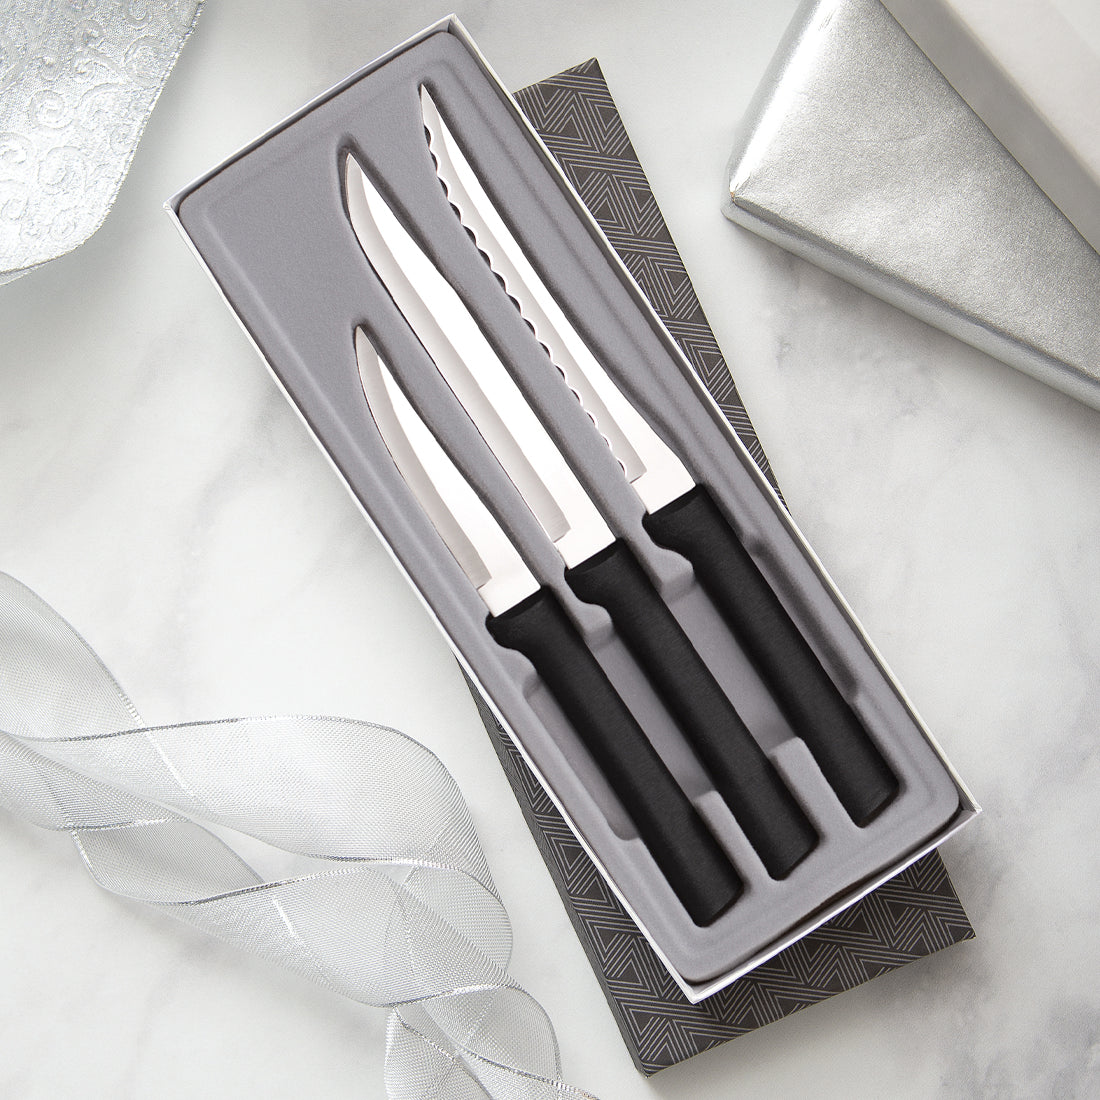 Rada Cutlery Knife Set 3 Paring knives +1 peeler S05 USA made L/R hand use  NEW